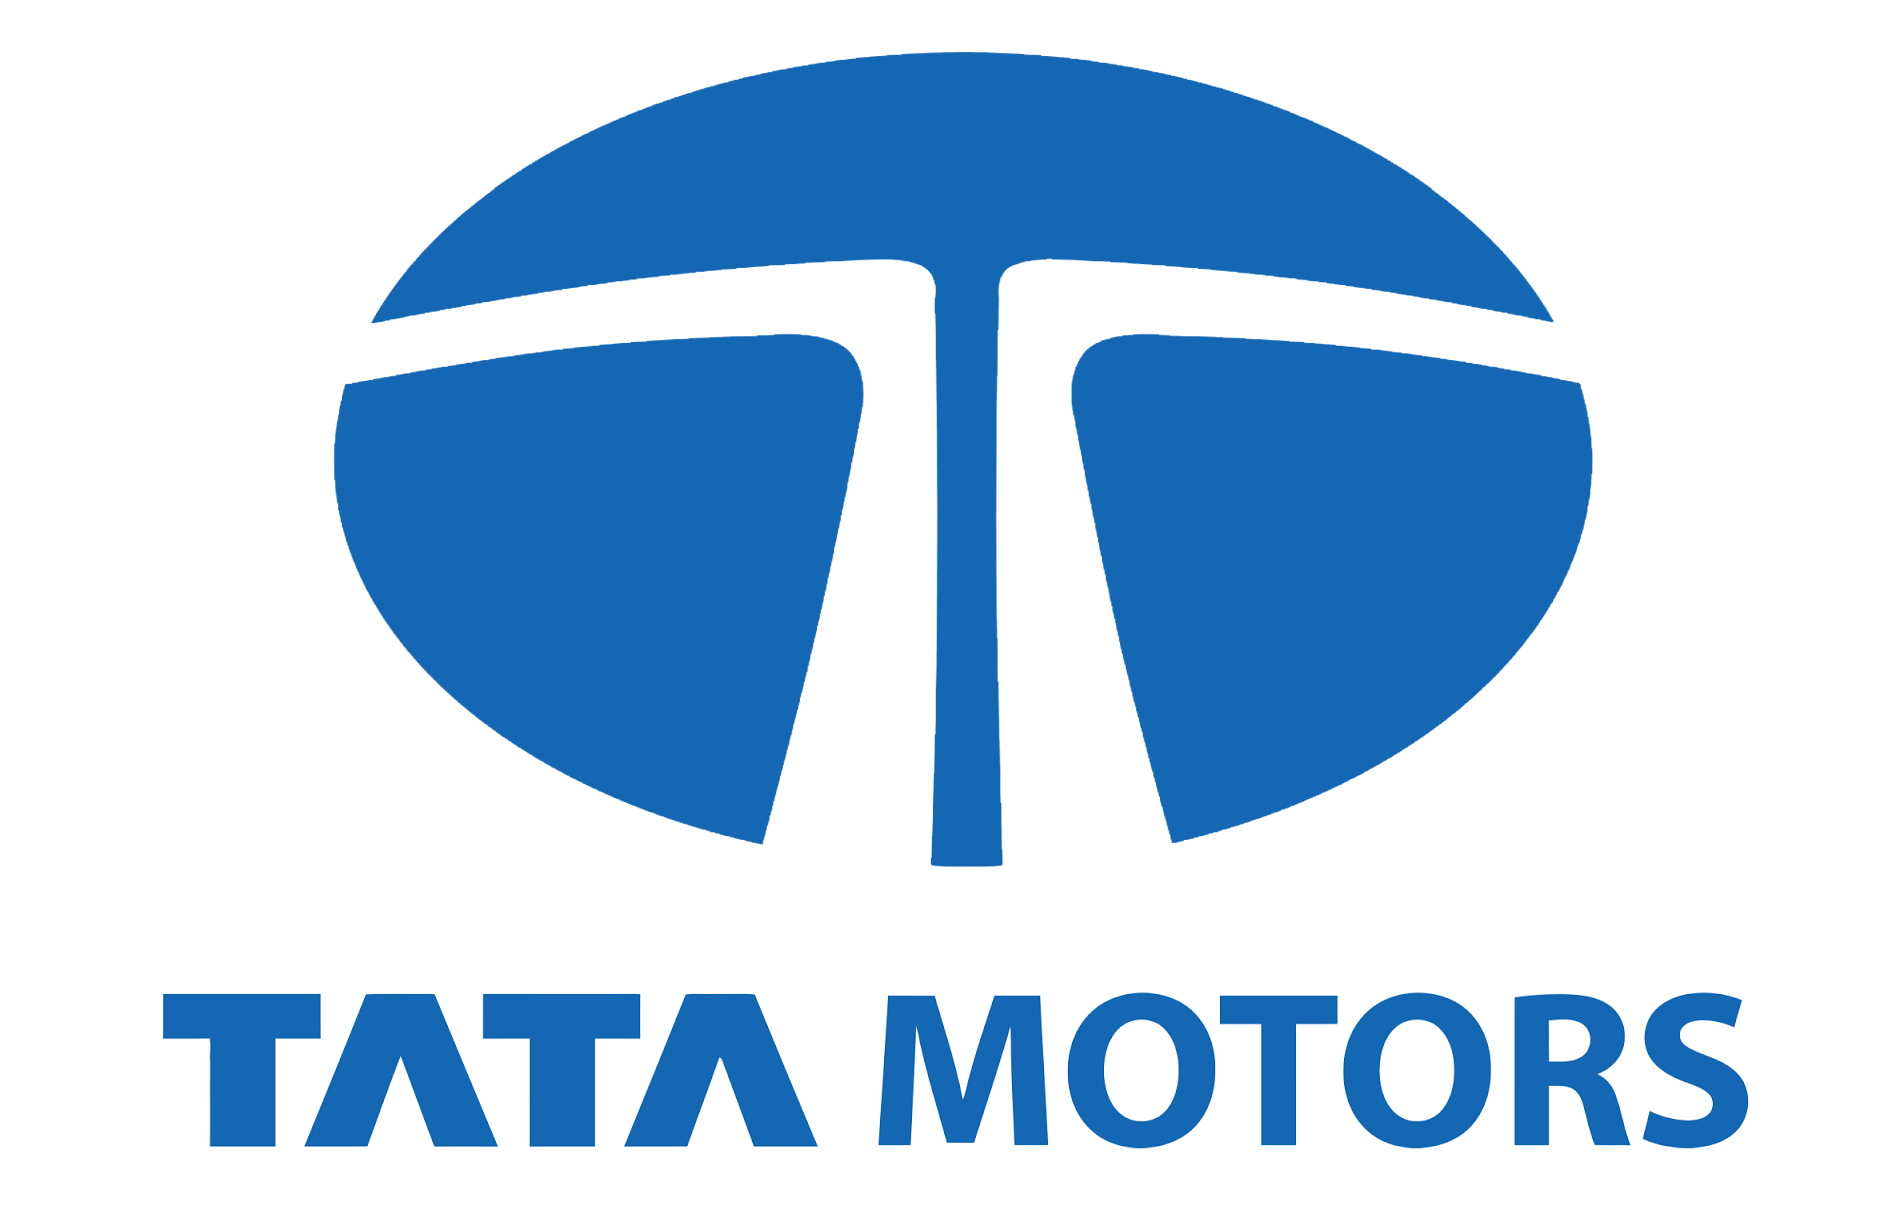 Tata Motors Cars Showroom - Grover Motors|Repair Services|Automotive